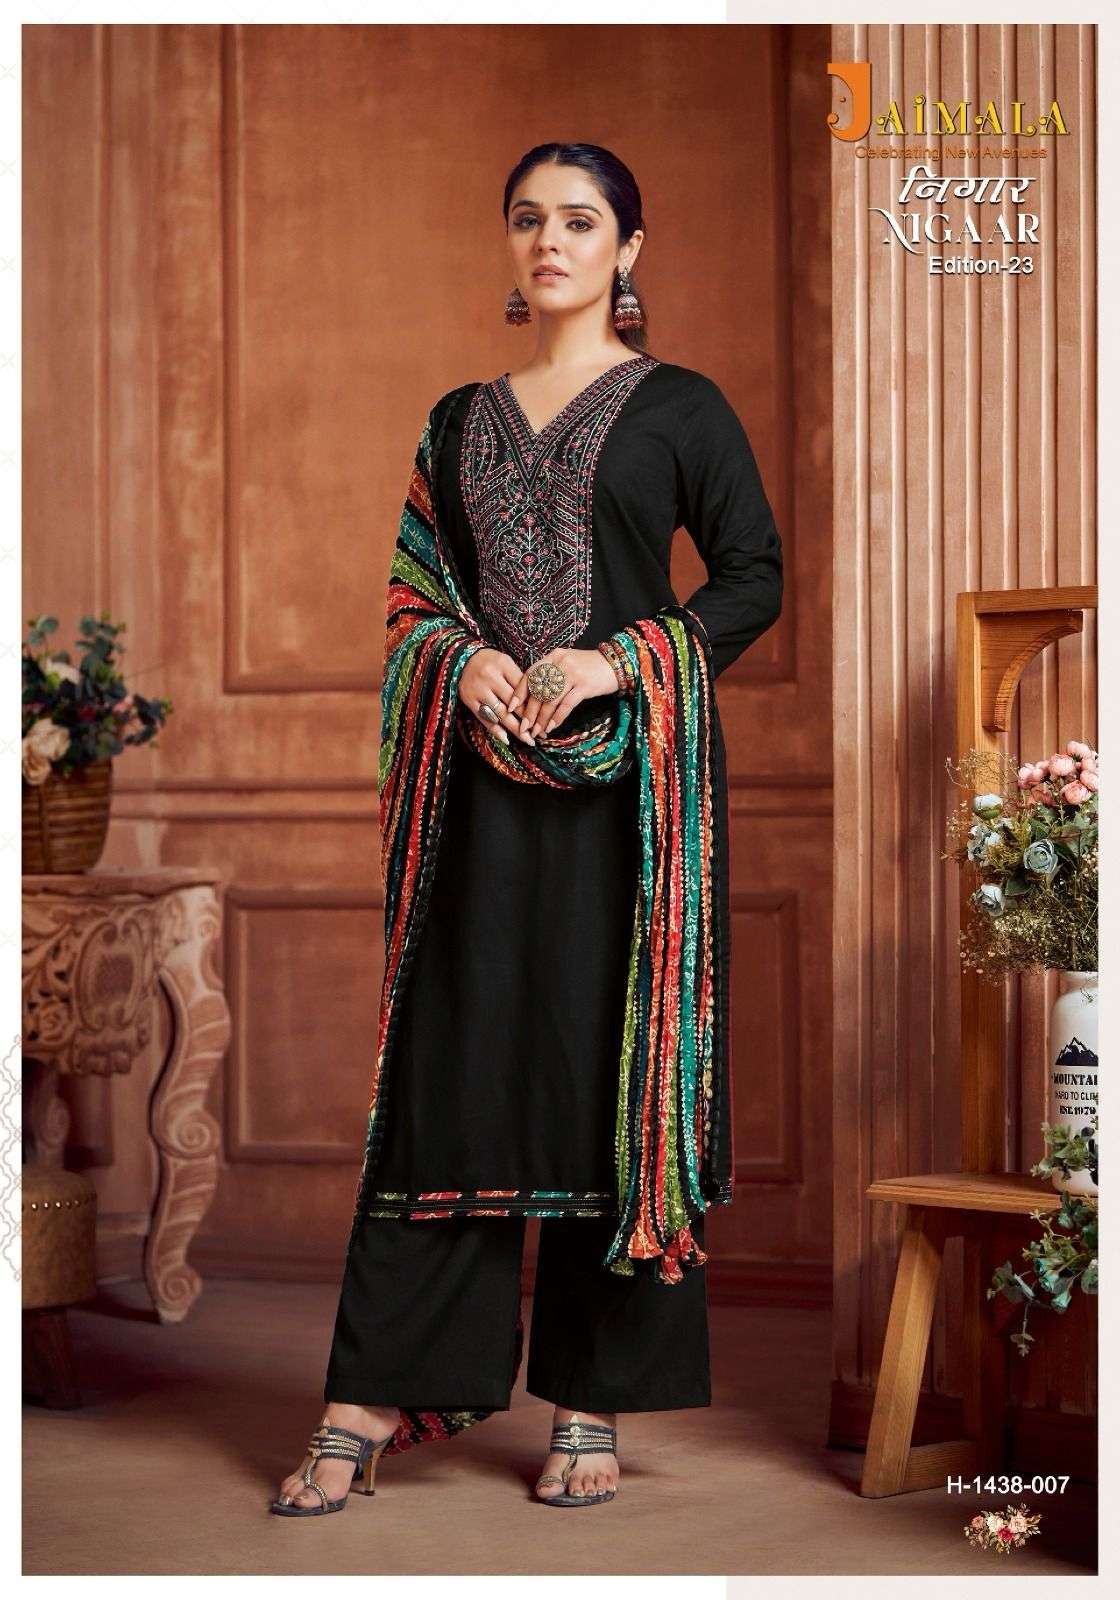 jaimala nigaar vol-23 latest designer salwar kameez at wholesaler price surat india gujarat